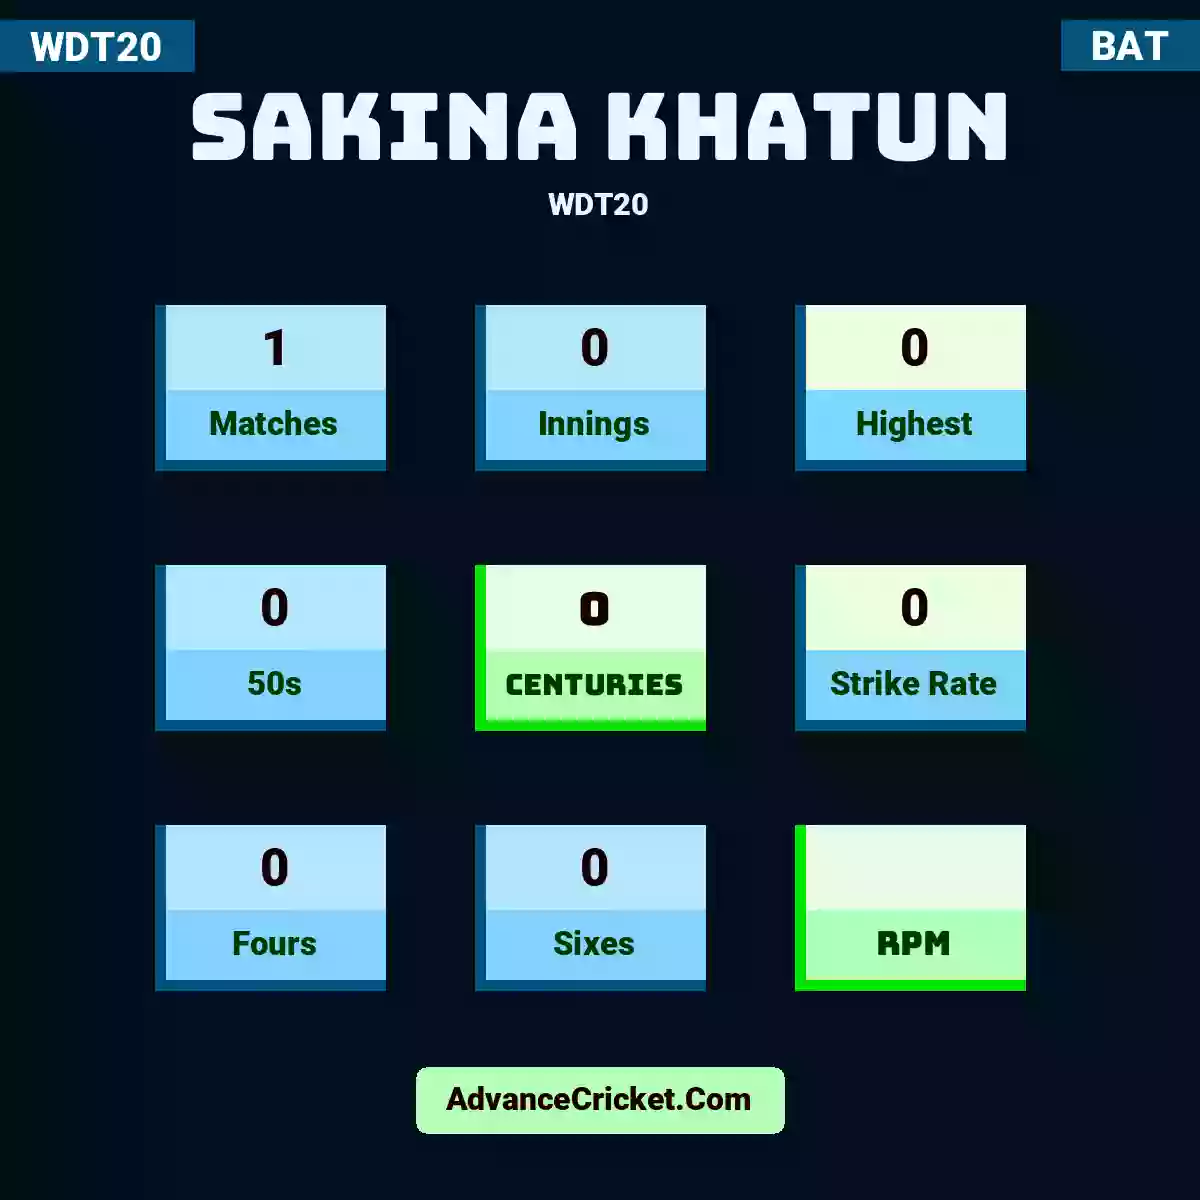 Sakina Khatun WDT20 , Sakina Khatun played 1 matches, scored 0 runs as highest, 0 half-centuries, and 0 centuries, with a strike rate of 0. S.Khatun hit 0 fours and 0 sixes.